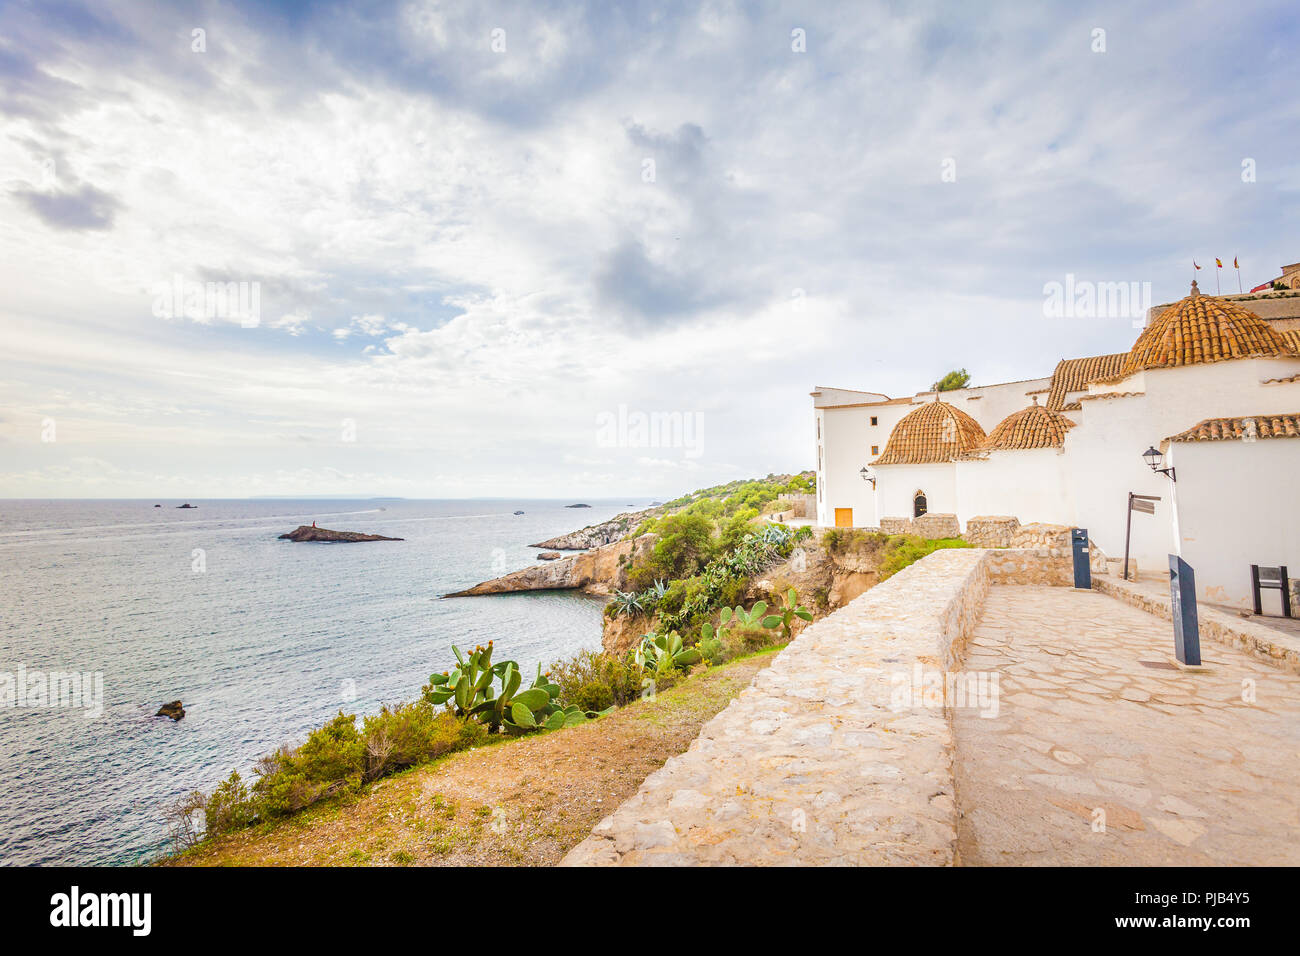 Panoramic view of scenic Ibiza island coastline, Balearic Islands in Spain Stock Photo